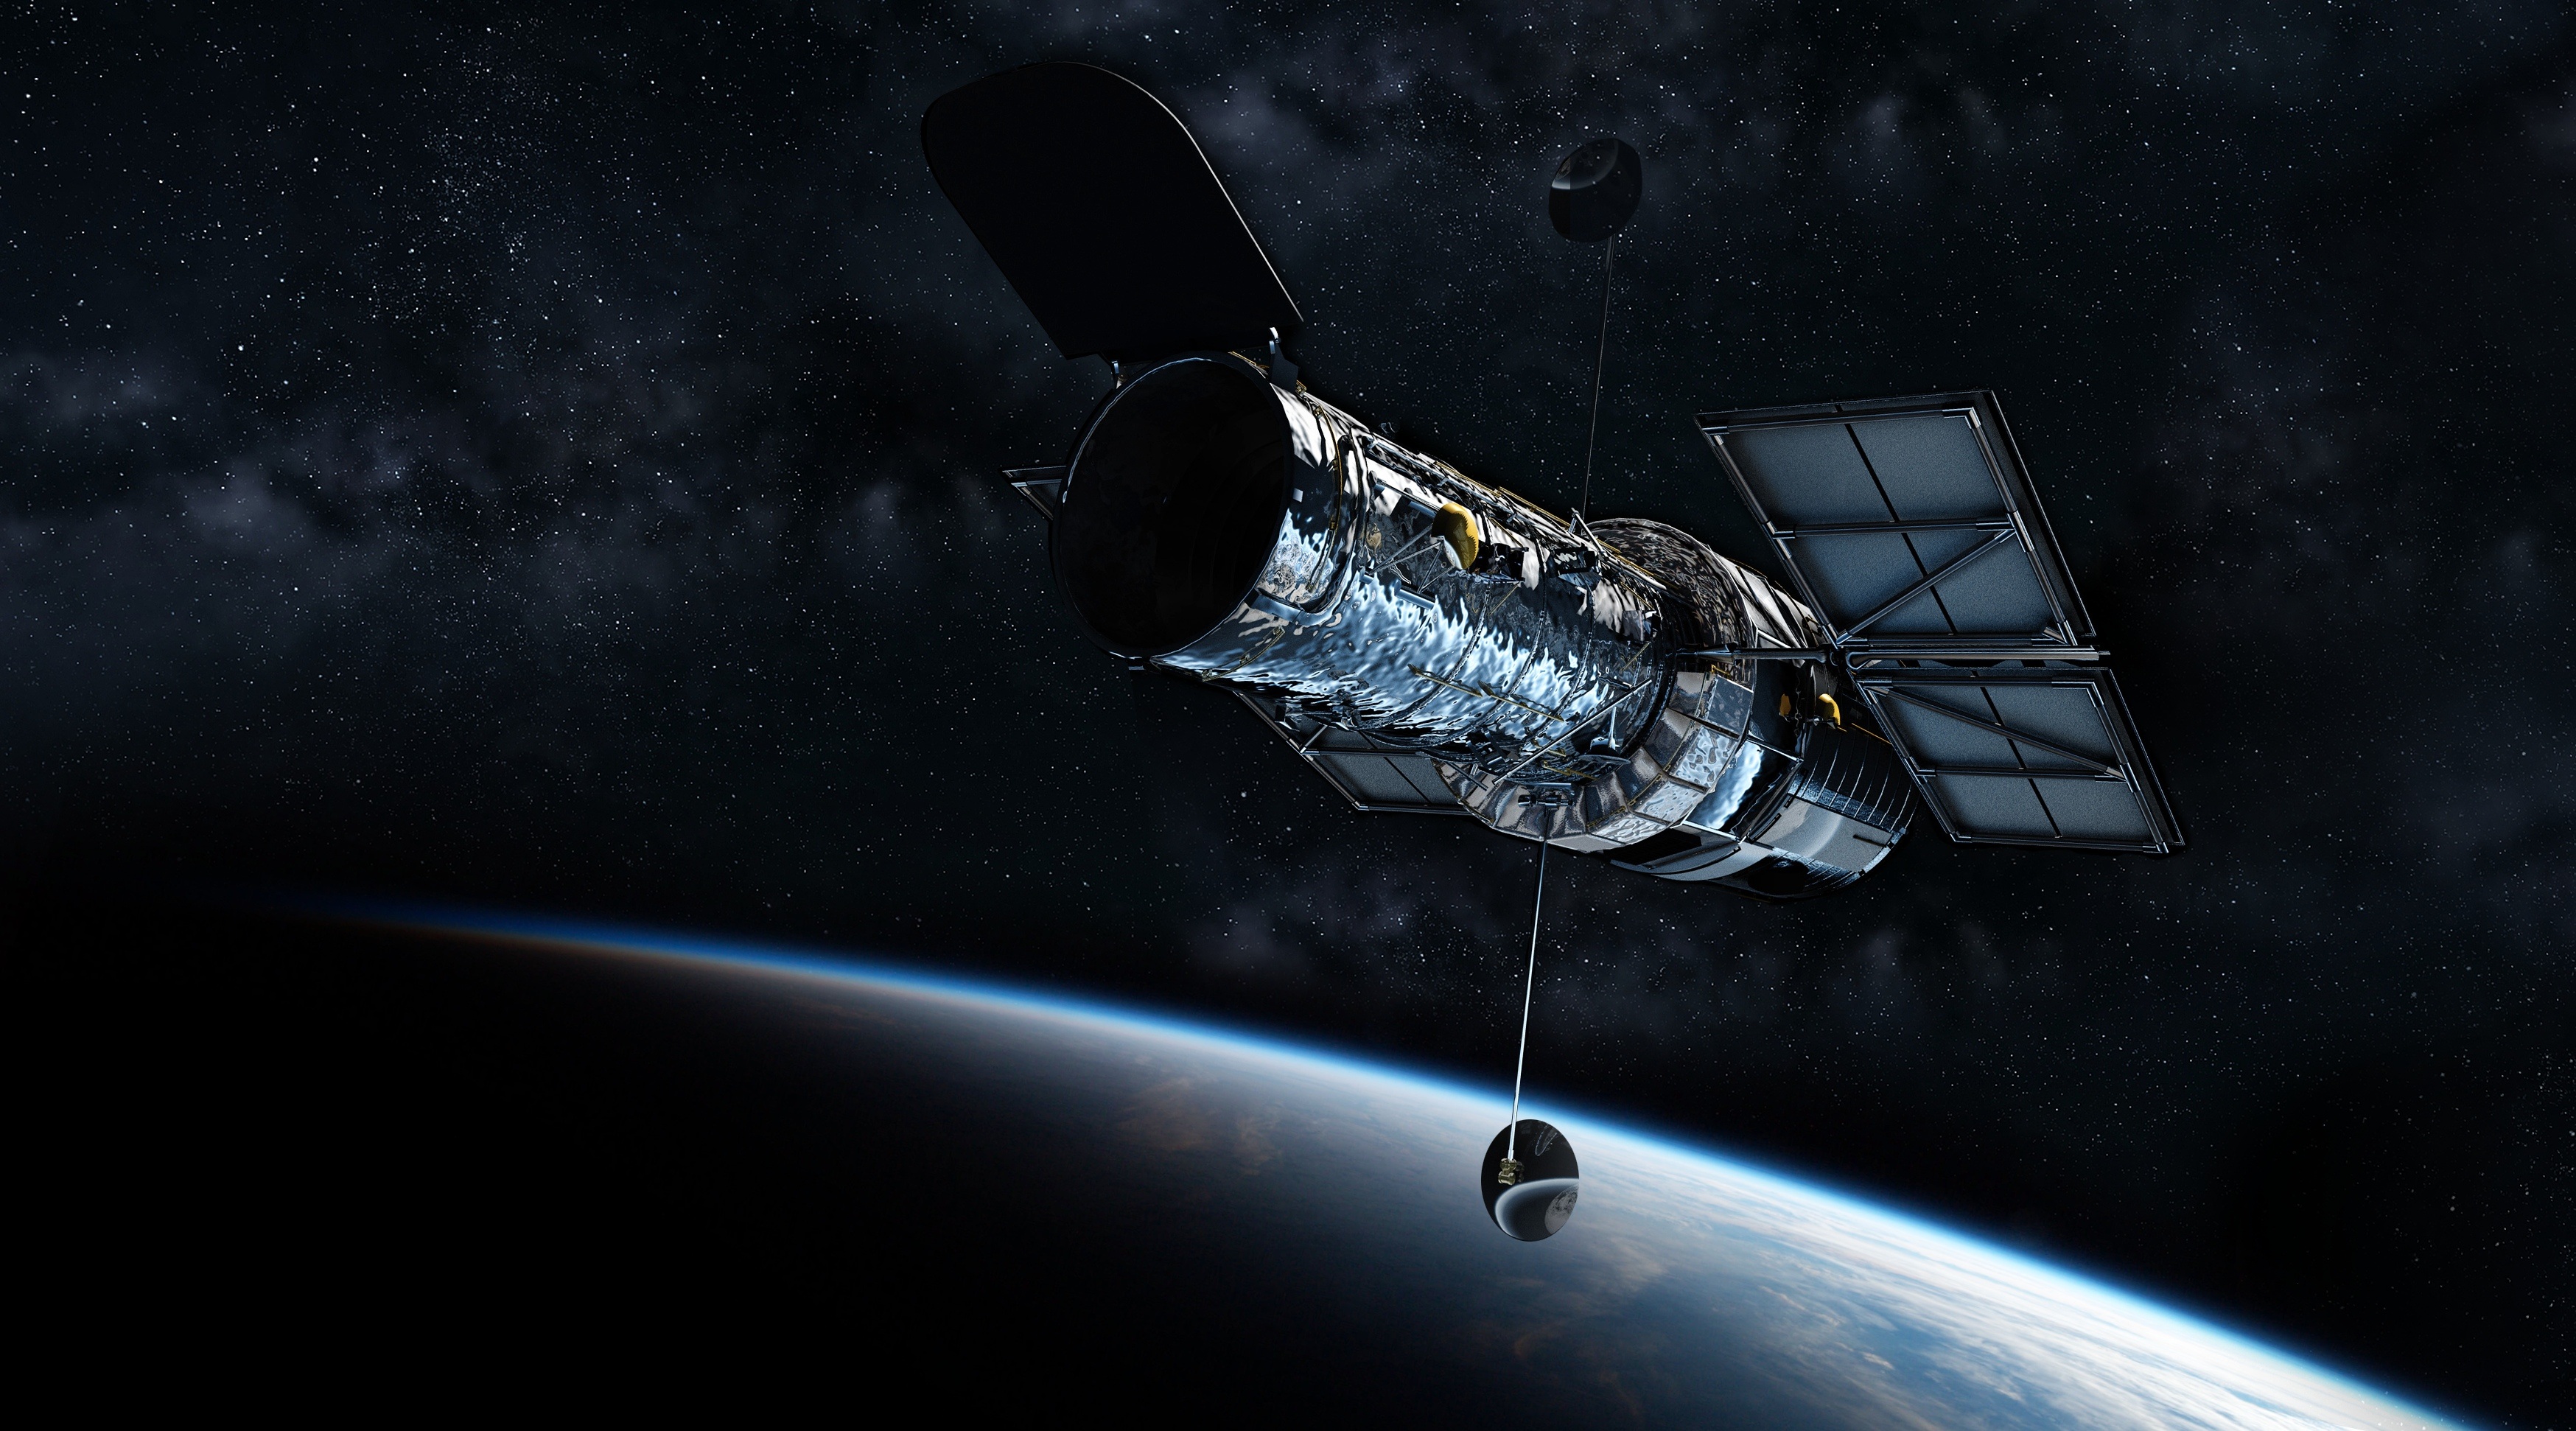 Norbert Biedrzycki cosmos satellite going into space